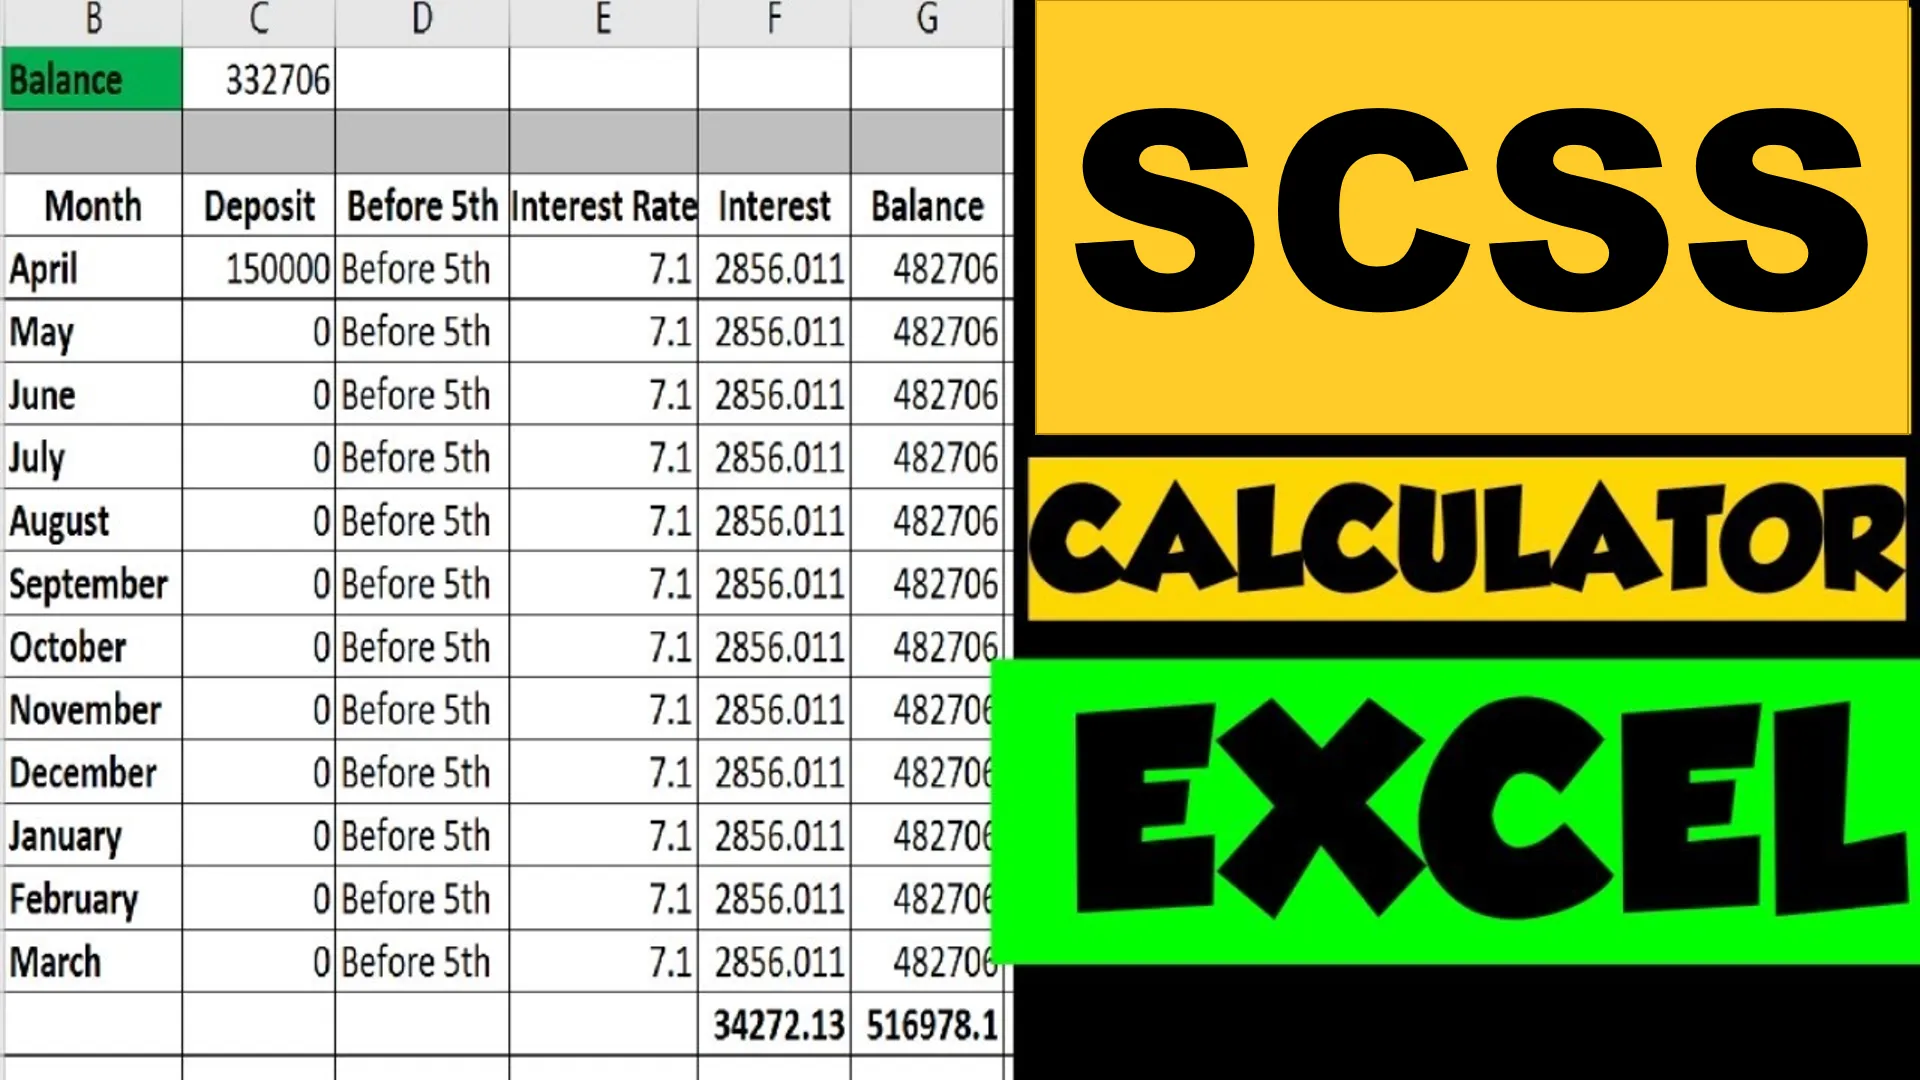 SCSS Calculator Excel | Senior Citizen Saving Scheme [VIDEO] - FinCalC Blog